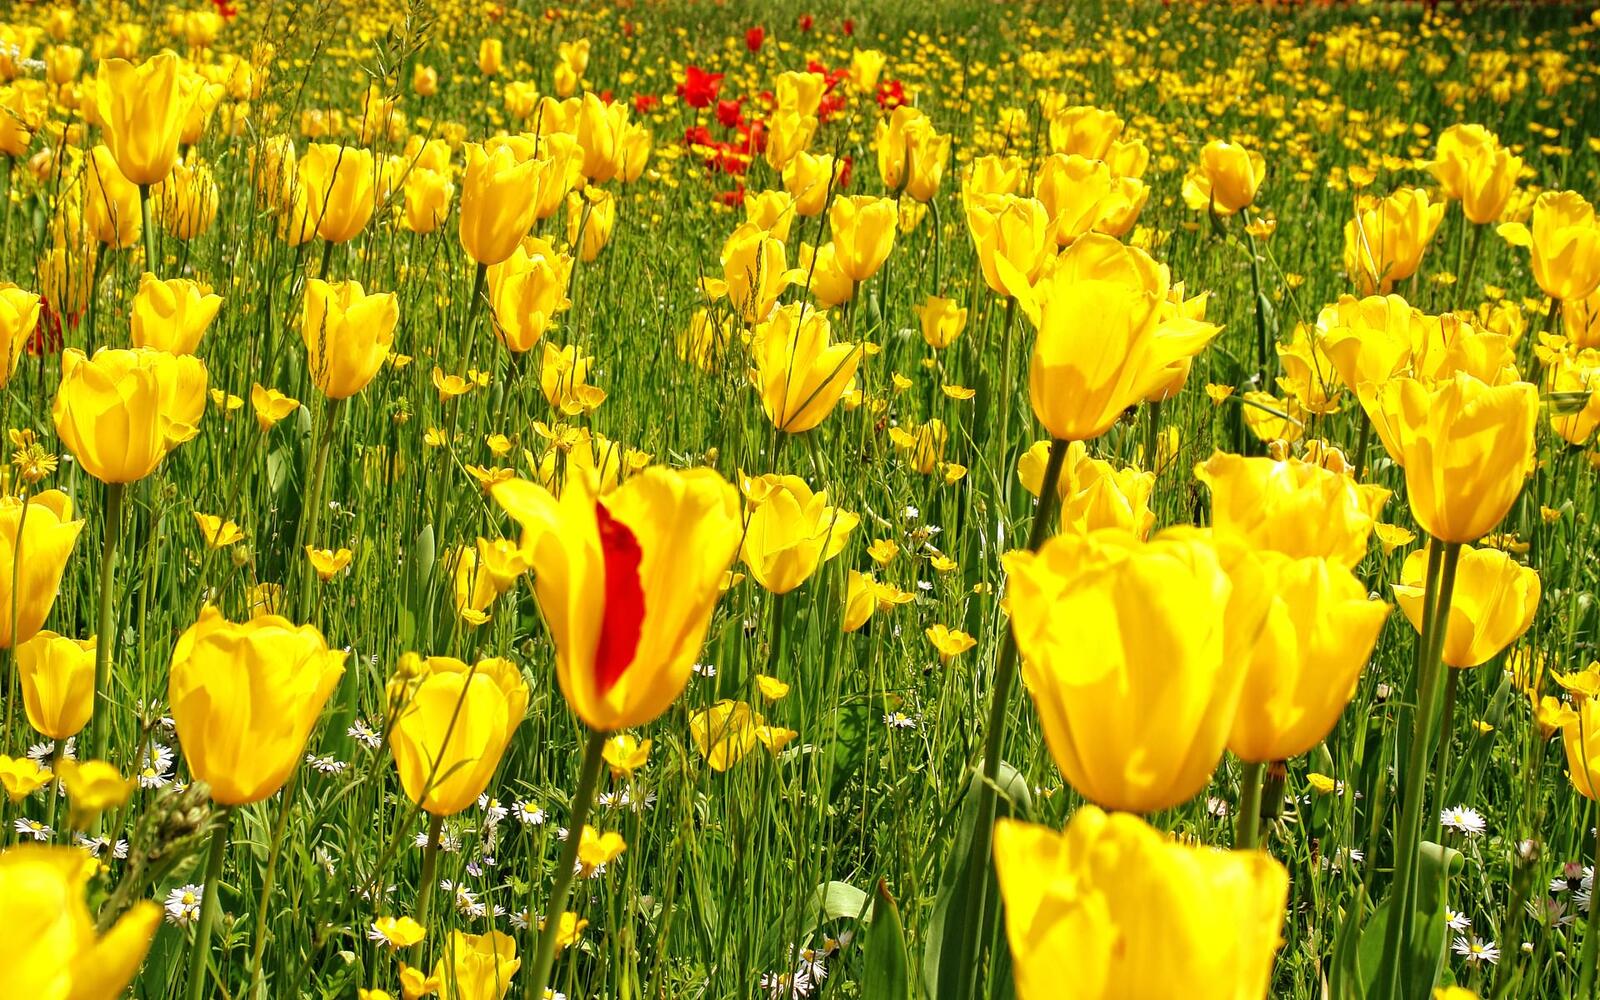 Wallpapers field tulips yellow on the desktop